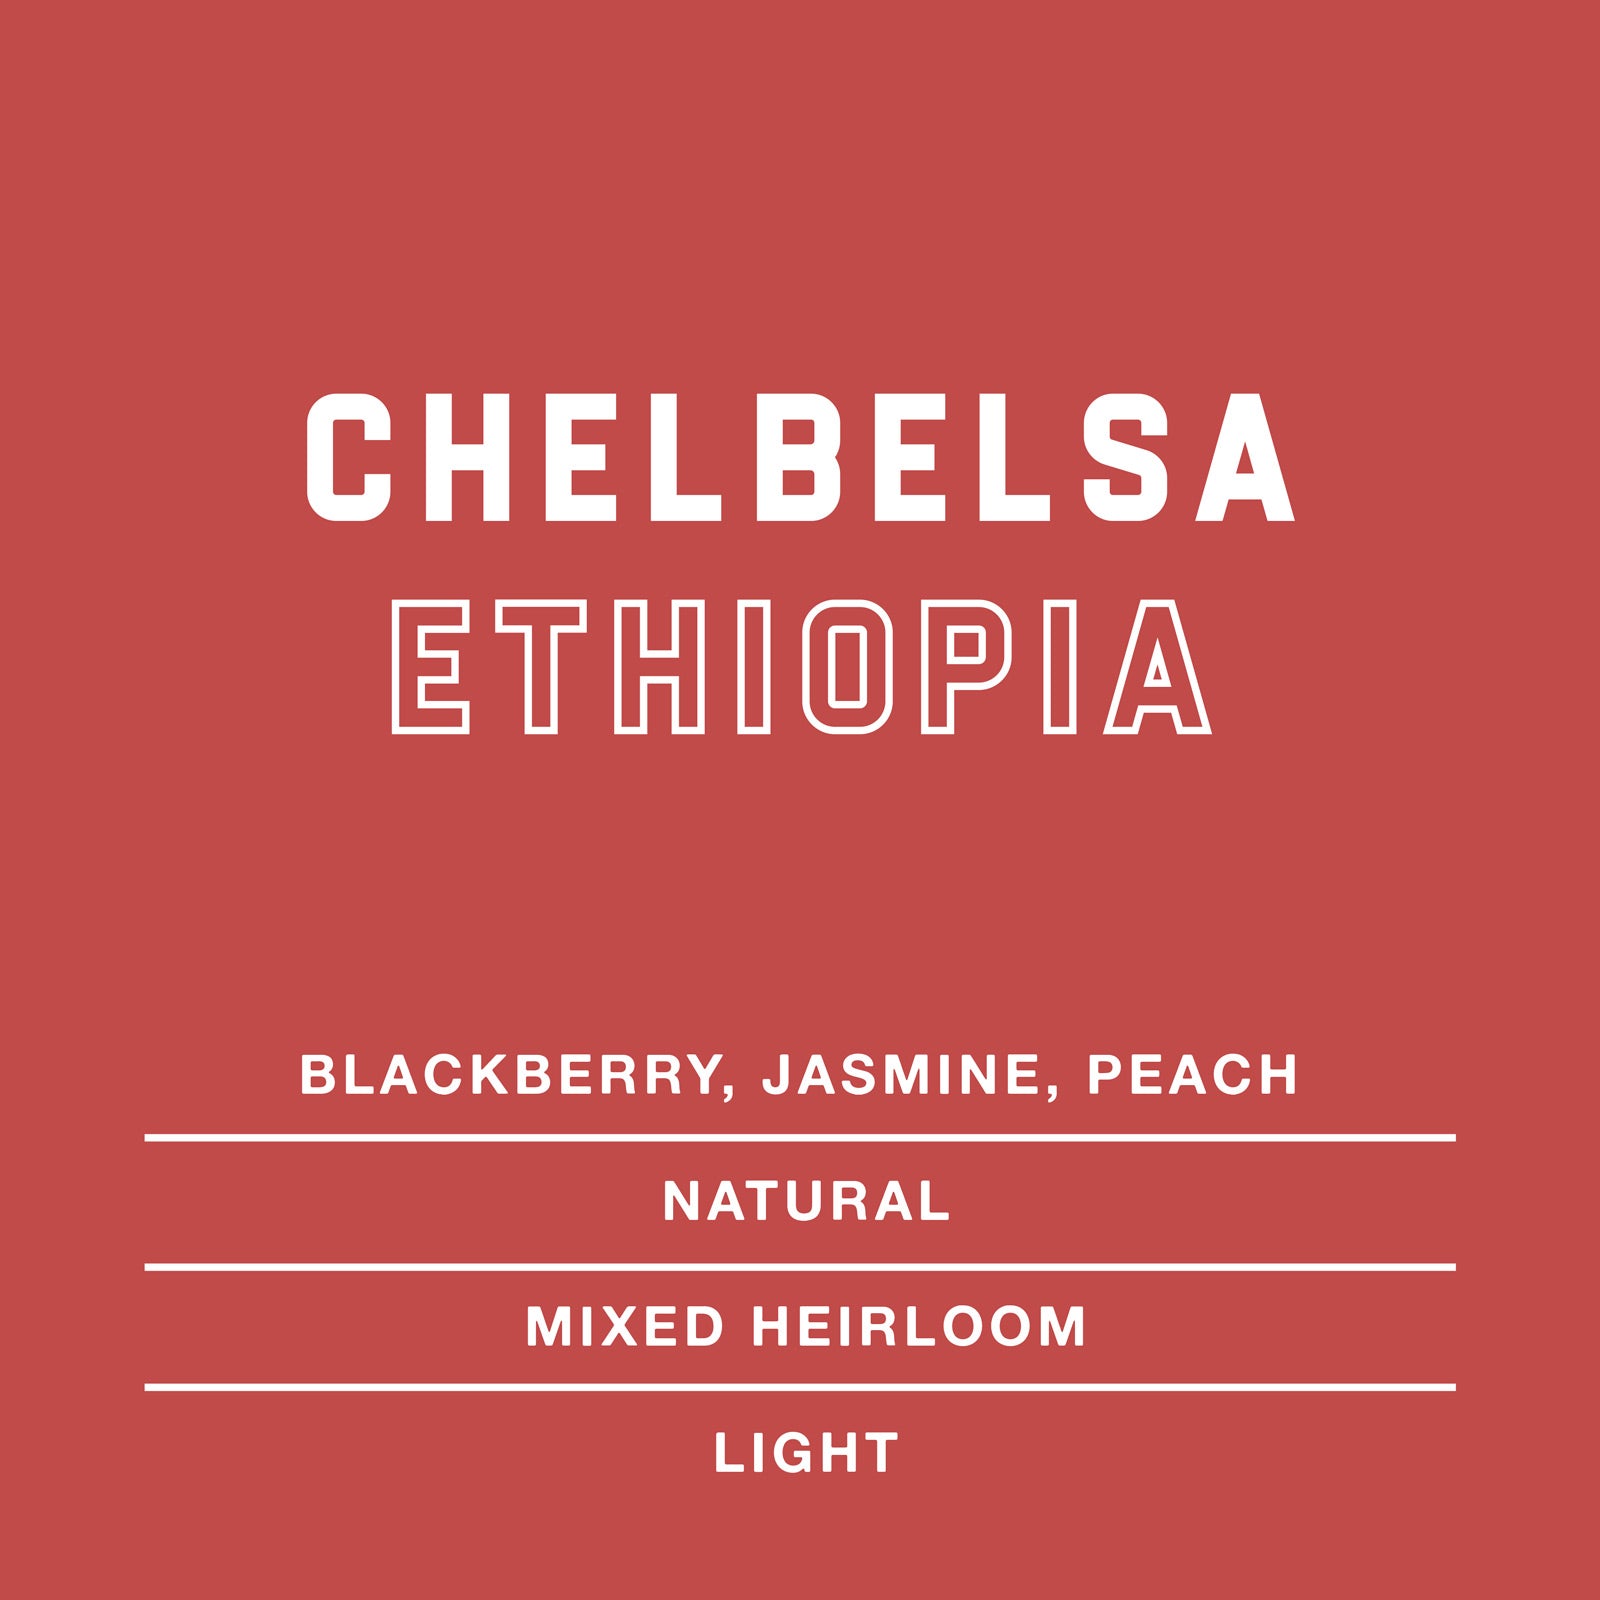 Chelbelsa-Ethiopia-Single-Origin-Coffee